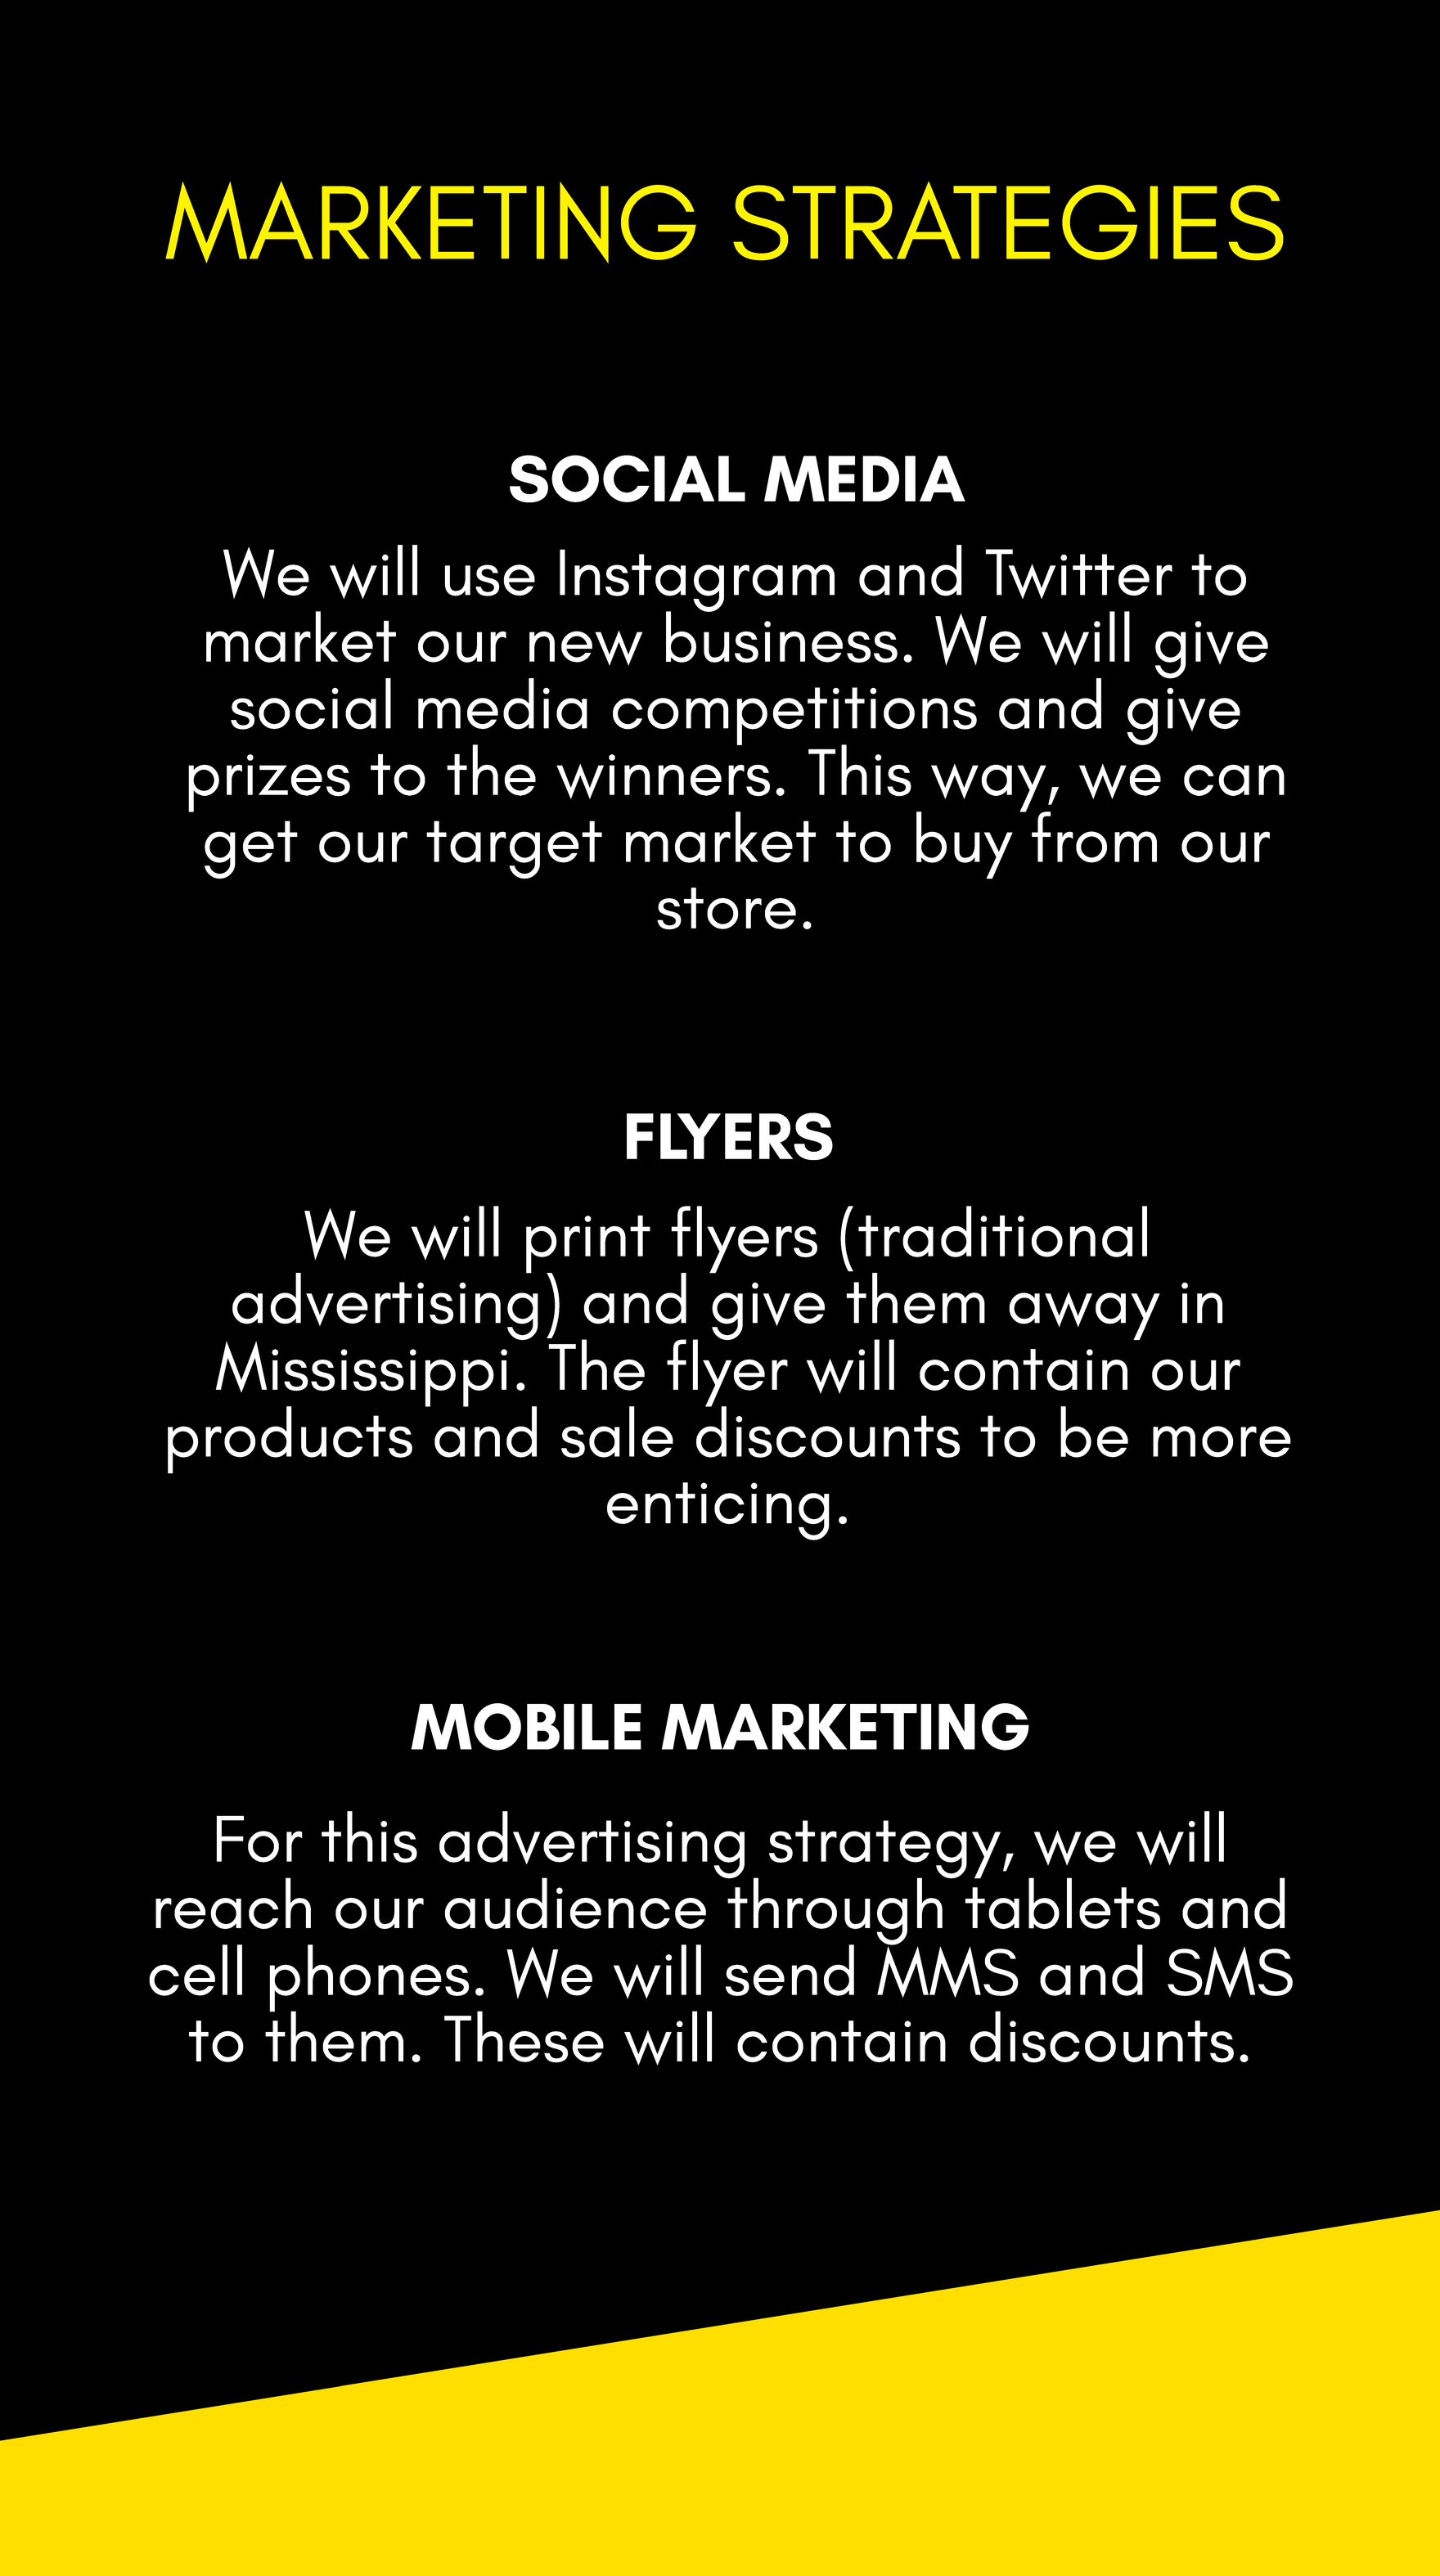 Business Plan Mobile Presentation